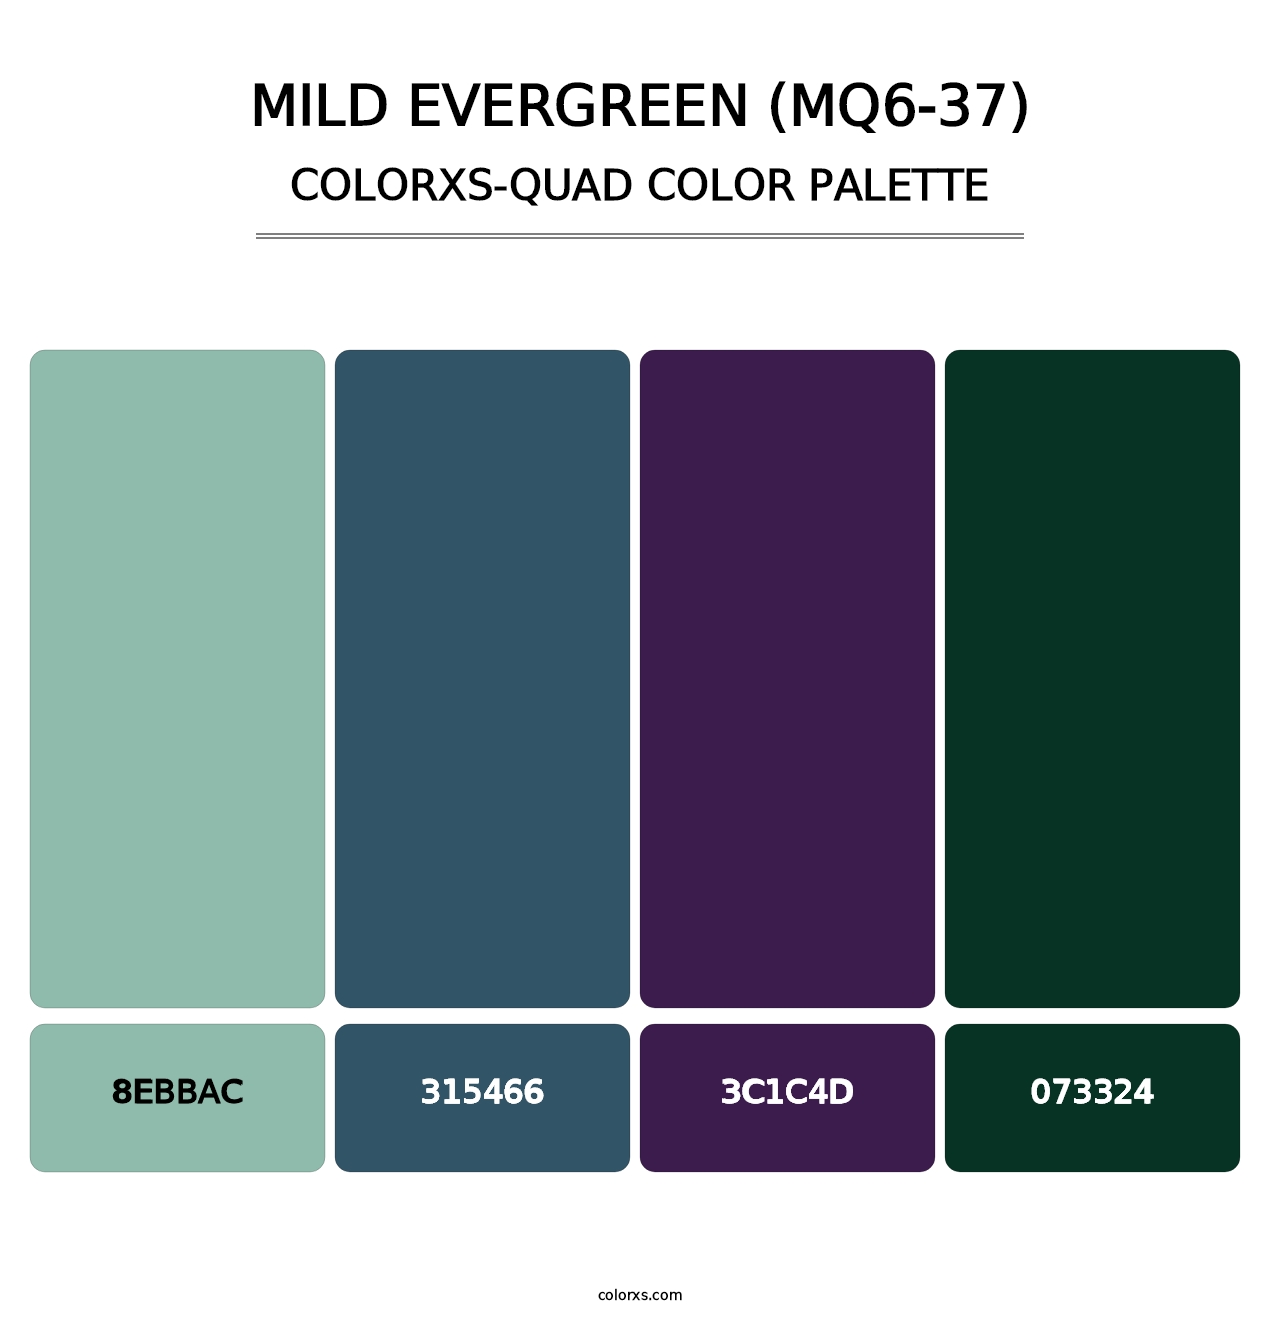 Mild Evergreen (MQ6-37) - Colorxs Quad Palette